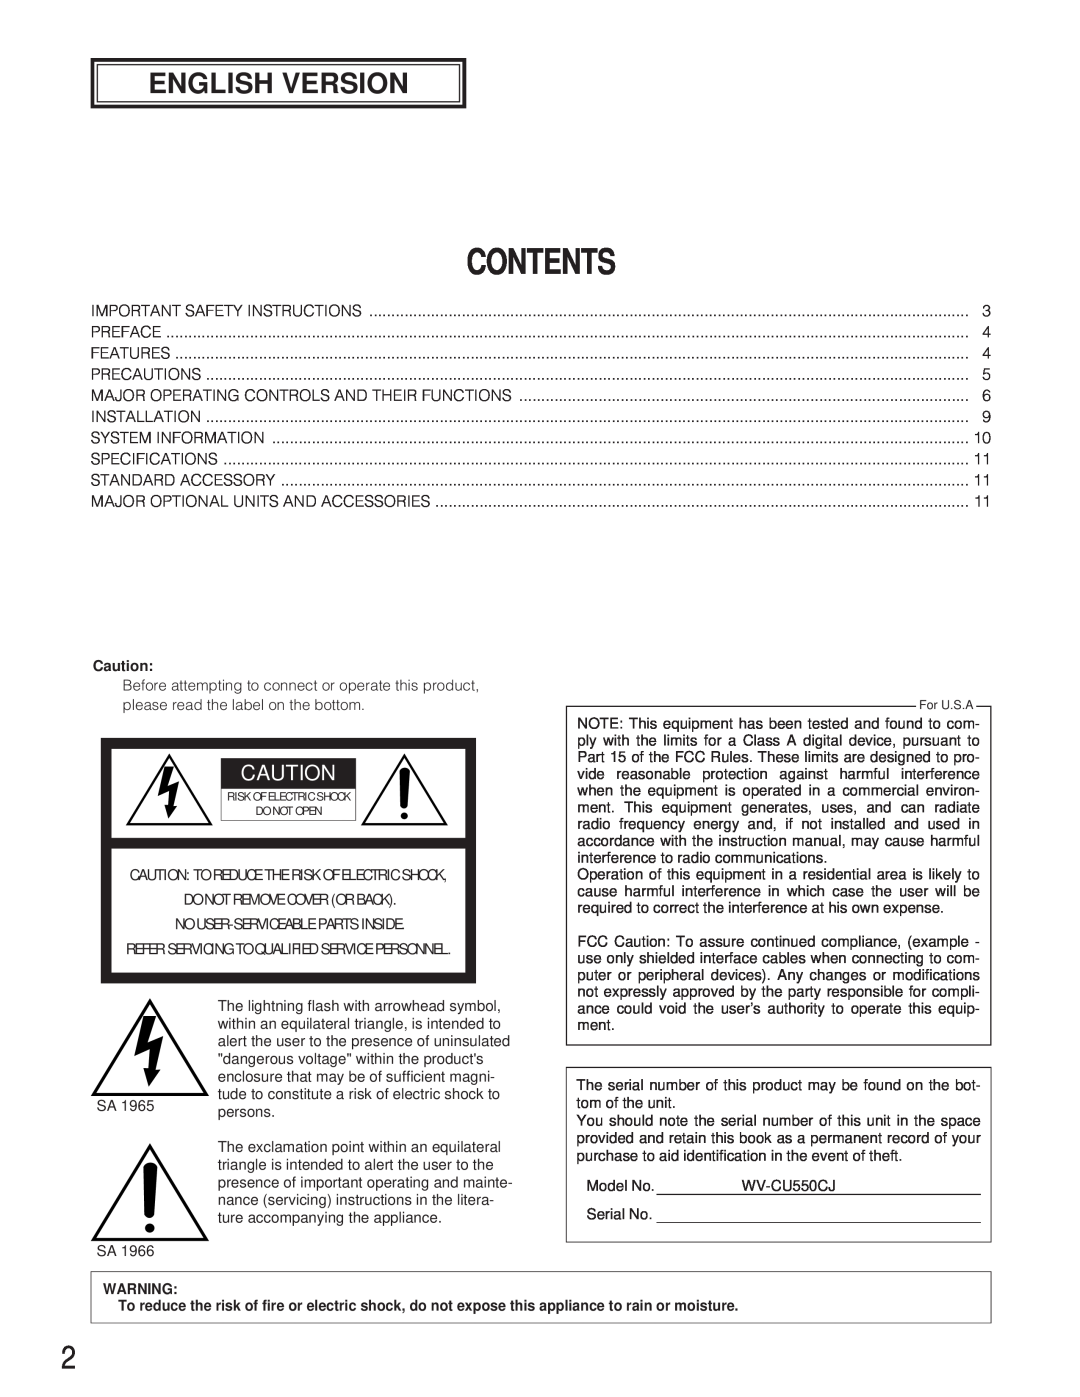 Panasonic WV-CU550CJ manual English Version, Contents 